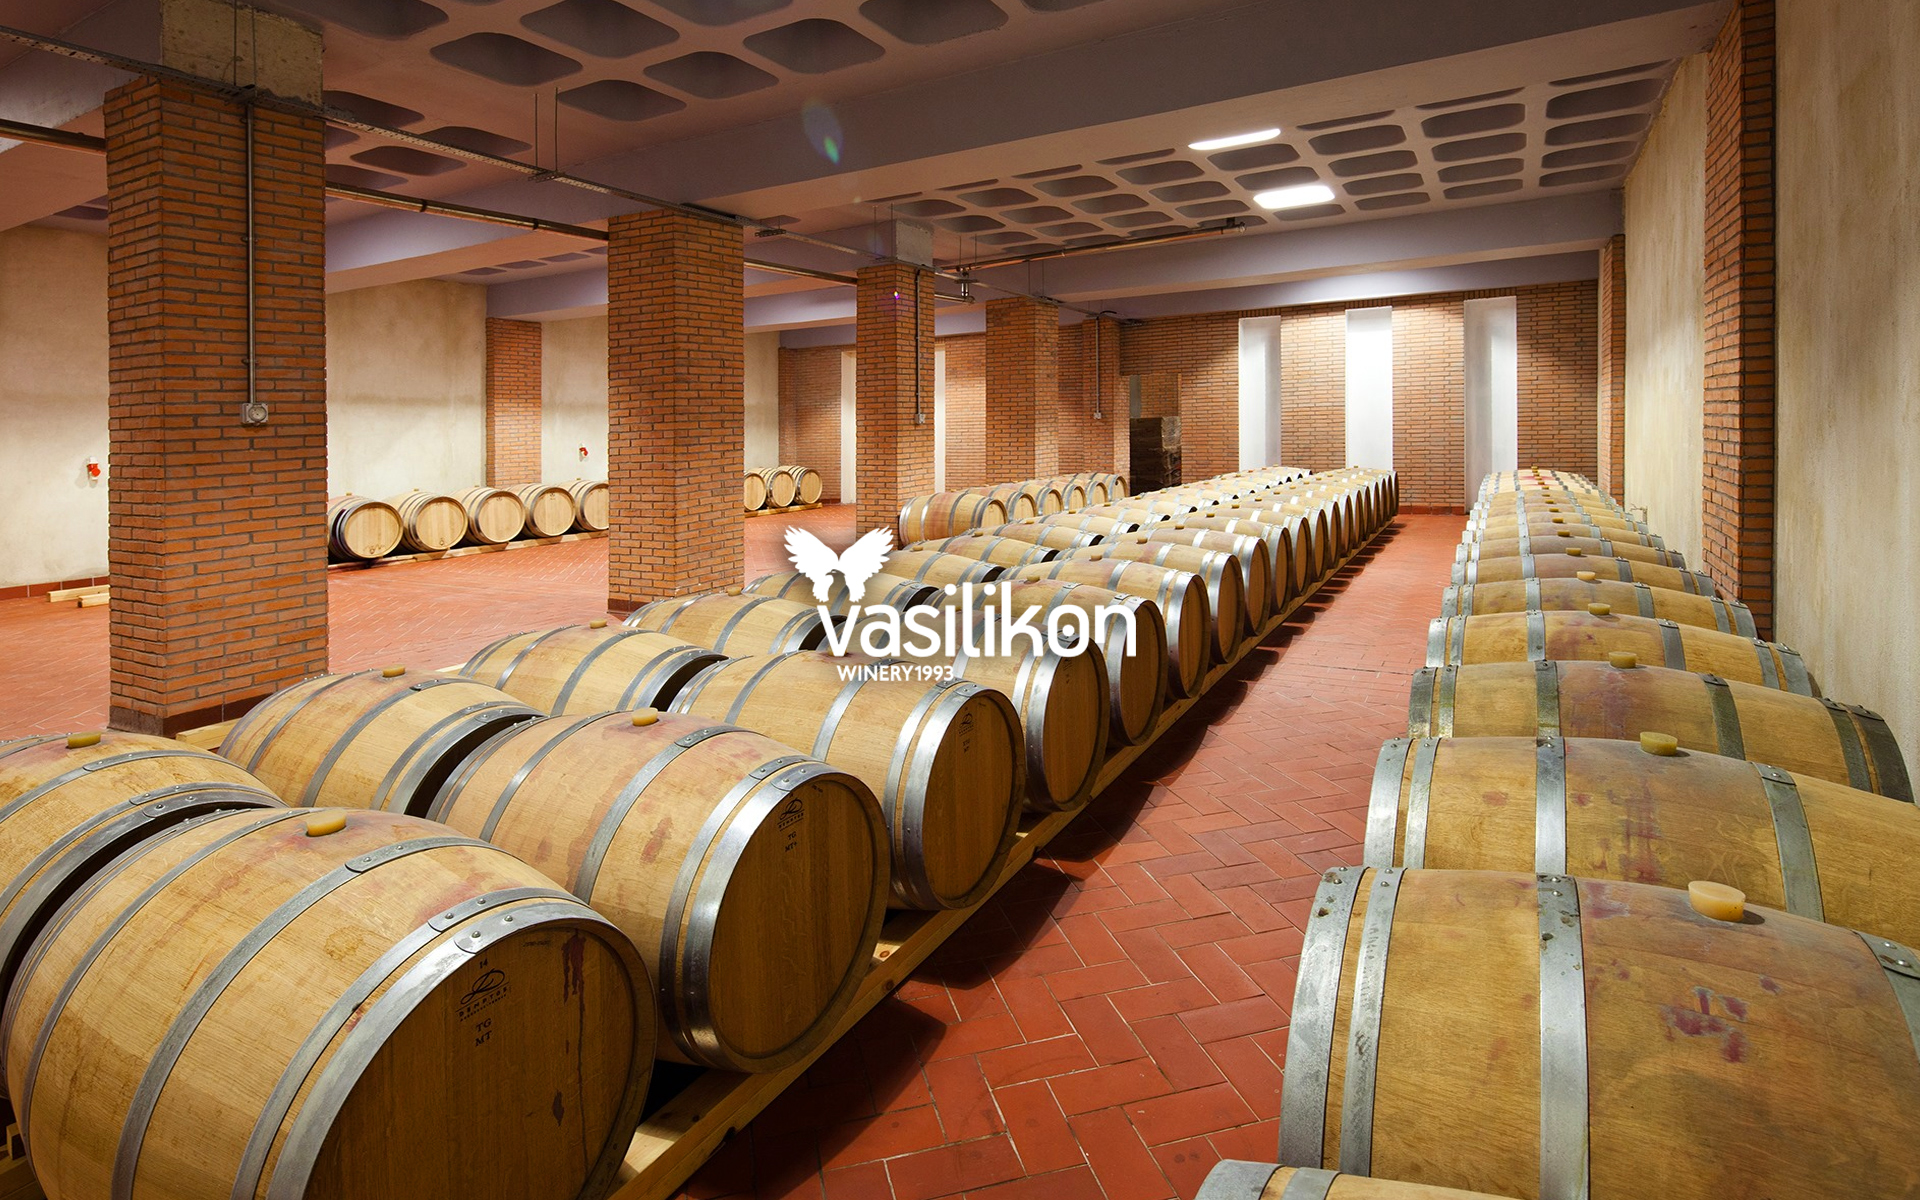 Vasilikon Winery in Cyprus